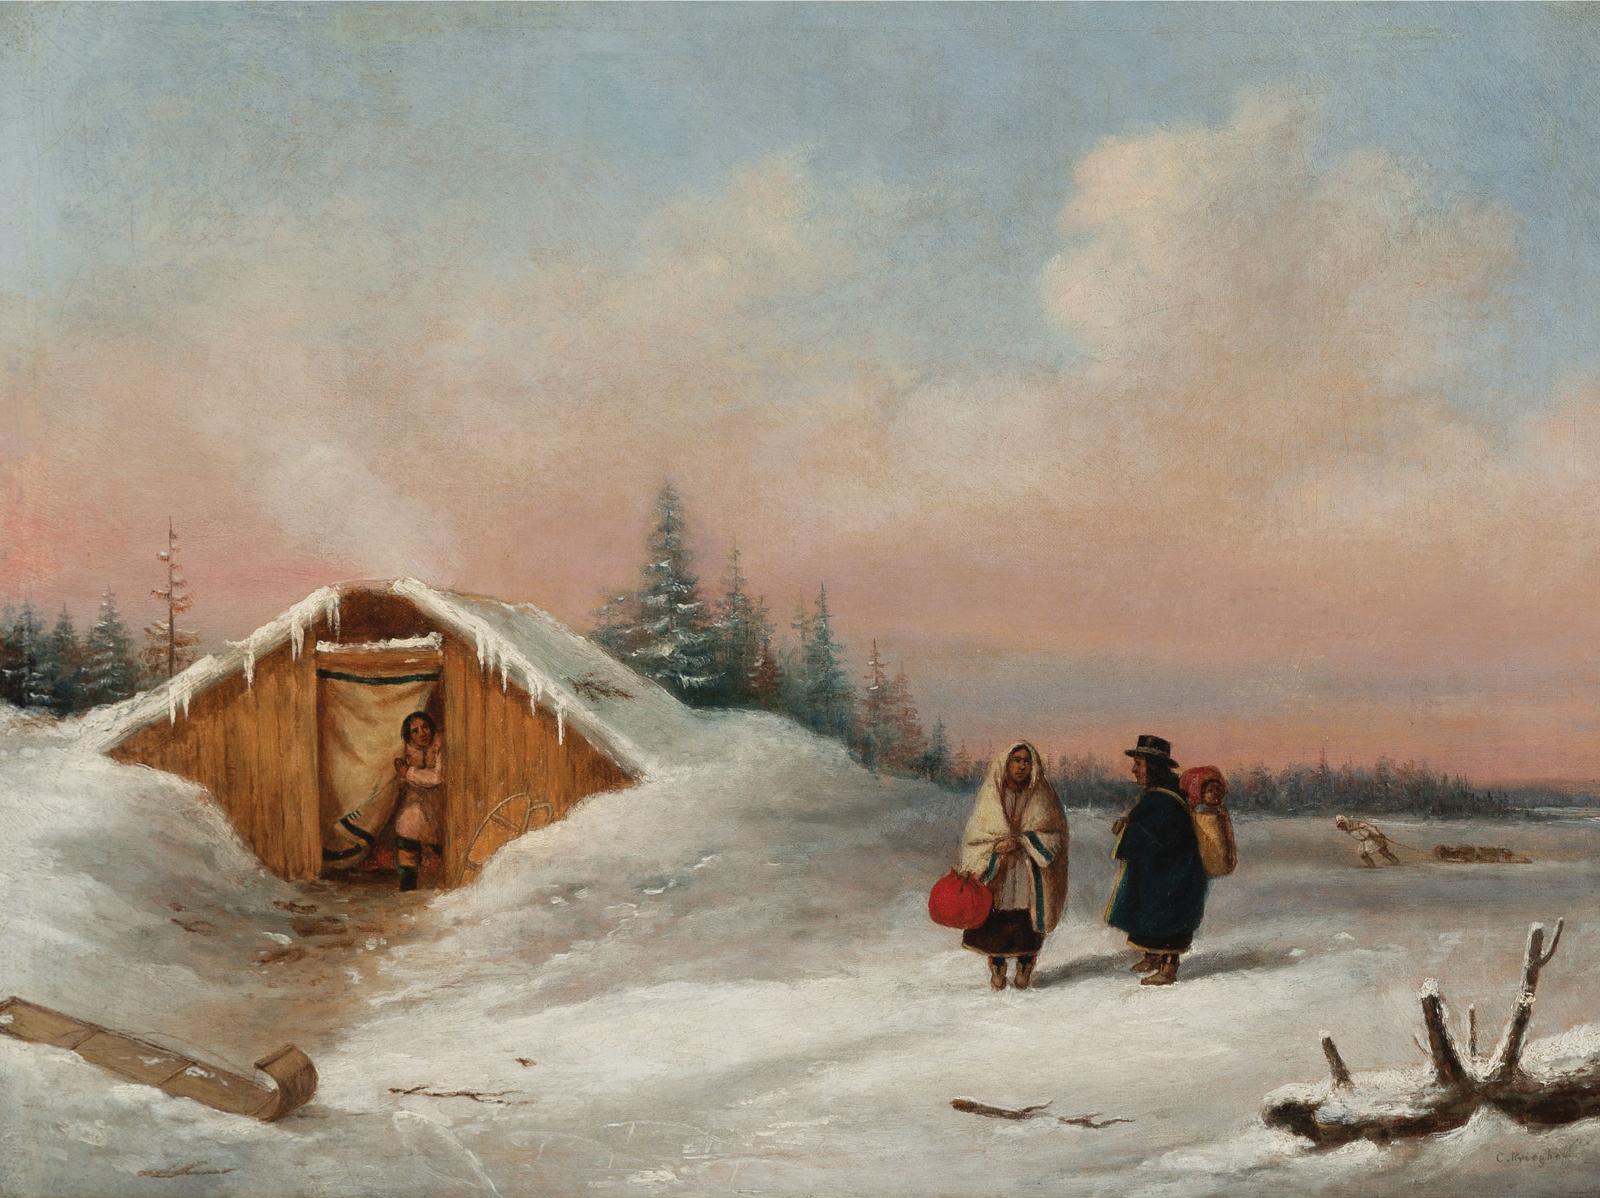 Cornelius David Krieghoff (1815-1872) - Indian Trappers, 1849